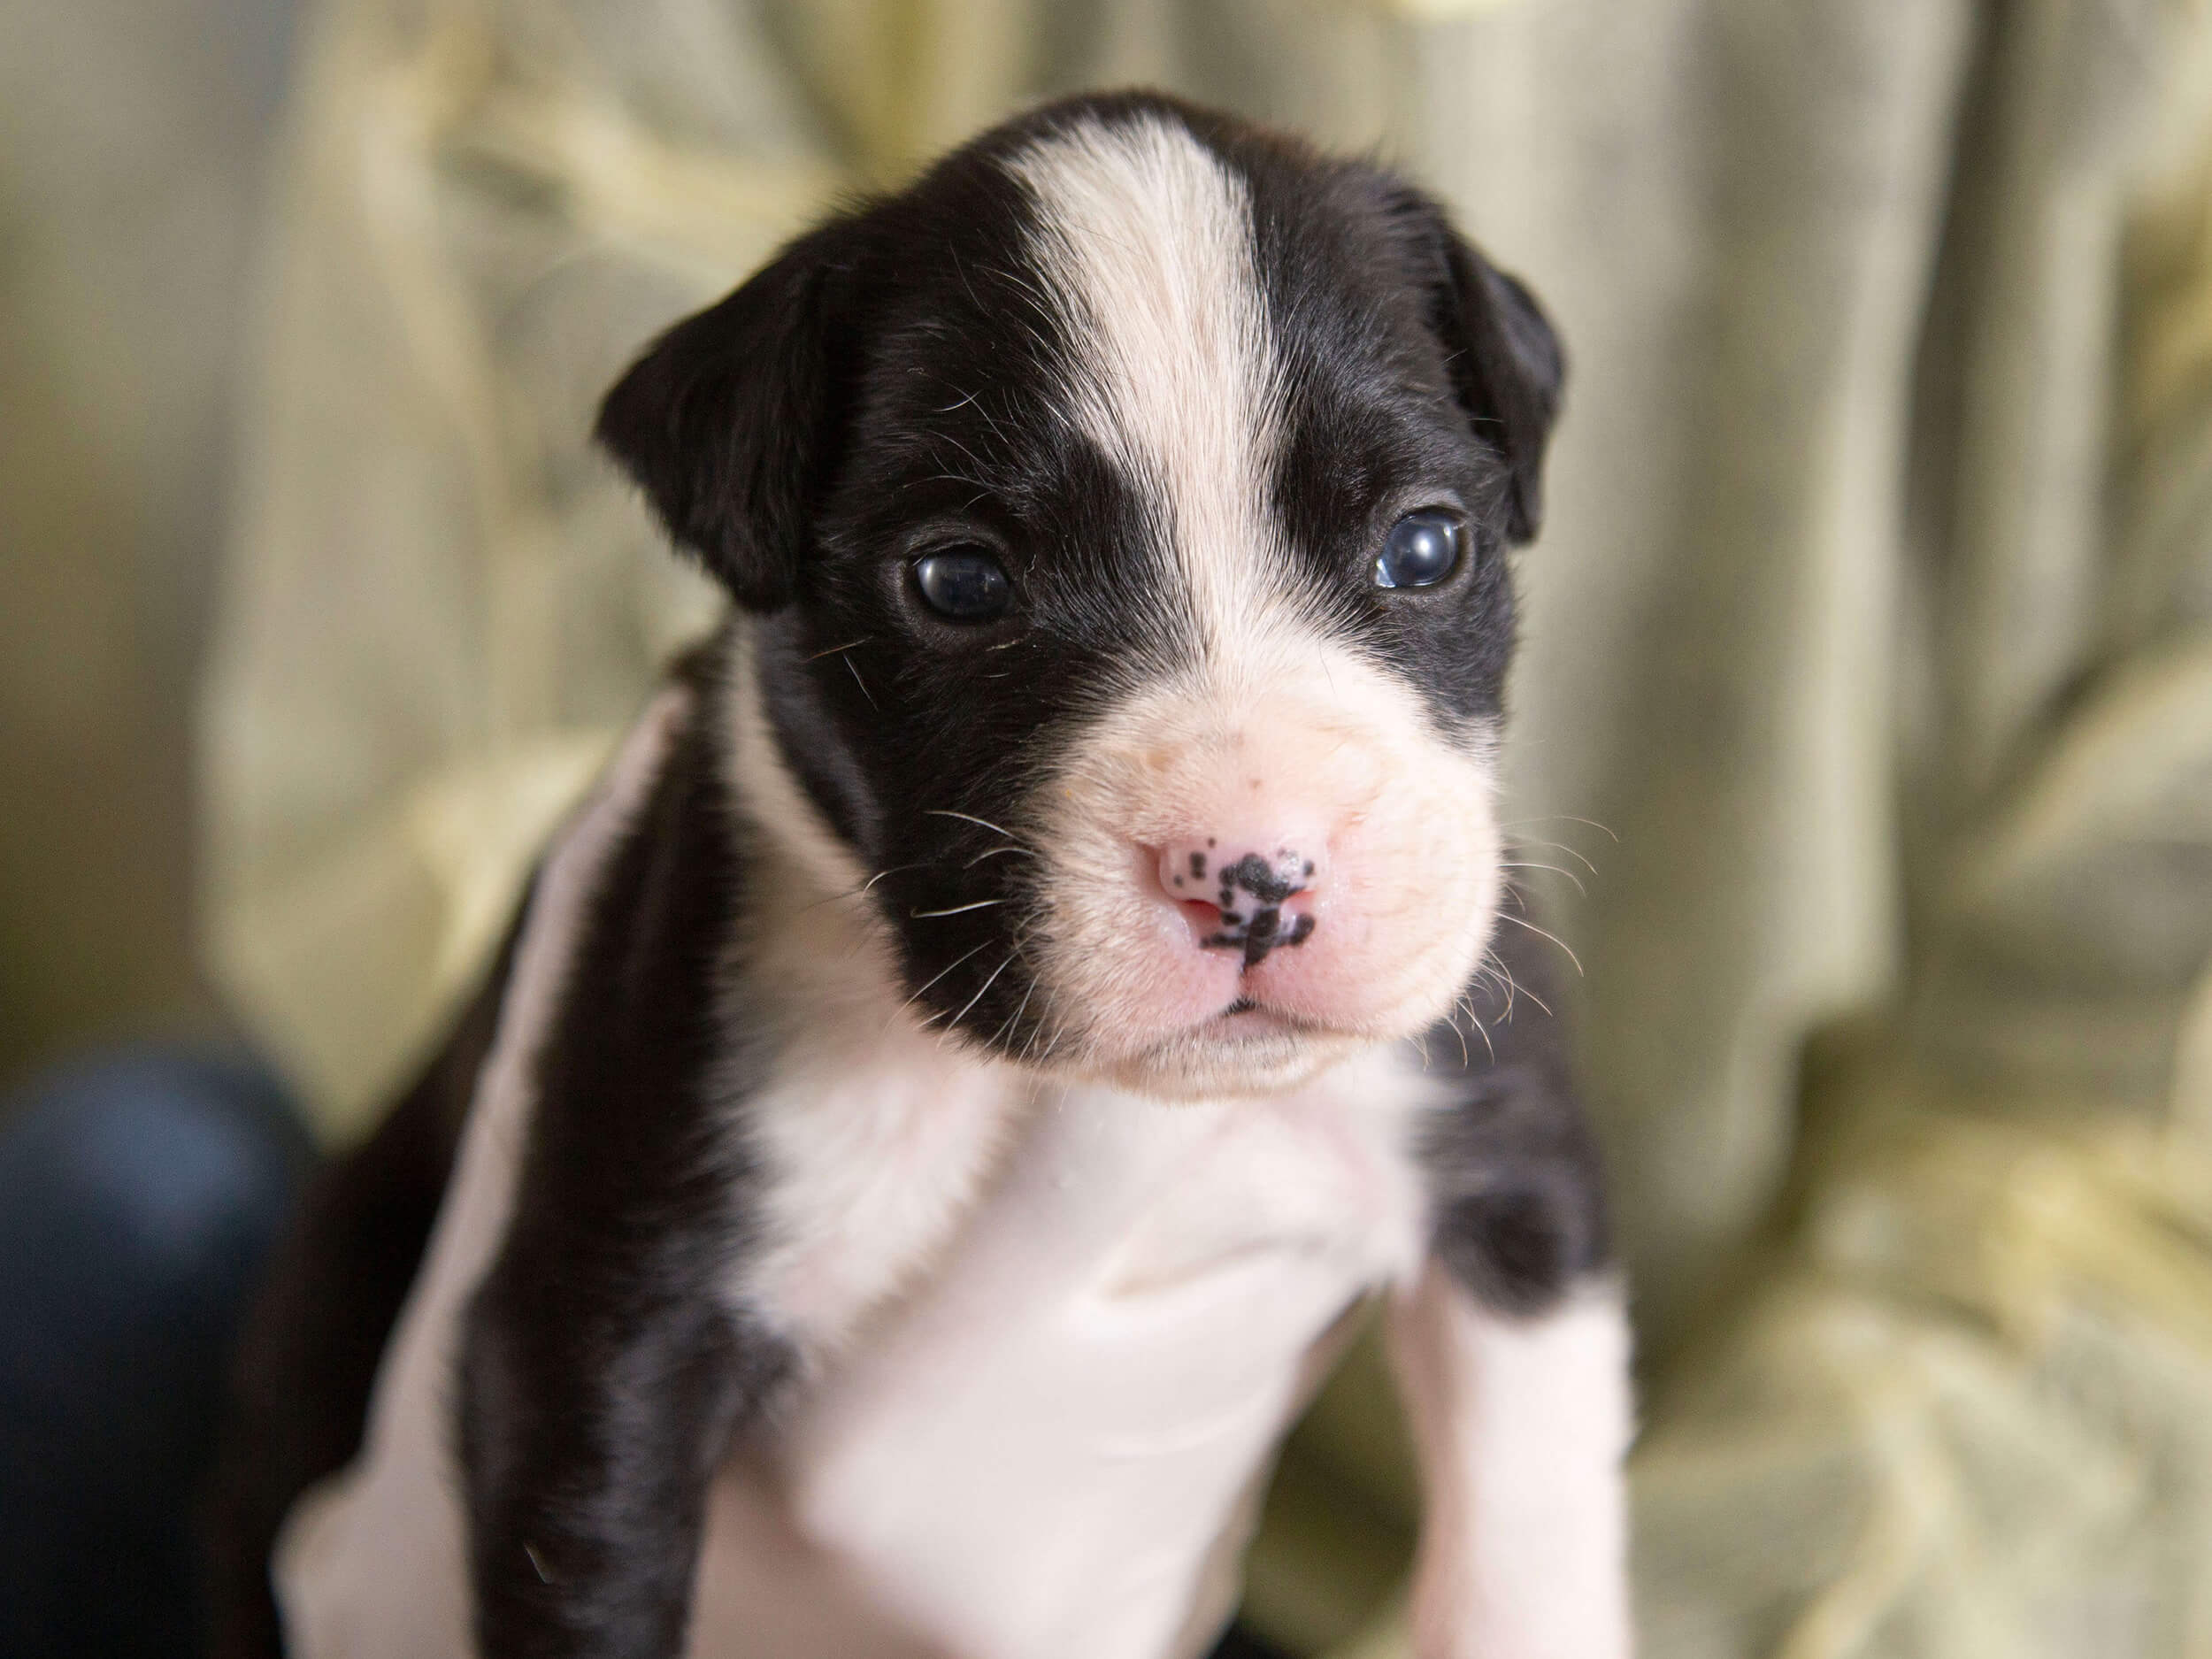 a newborn puppy